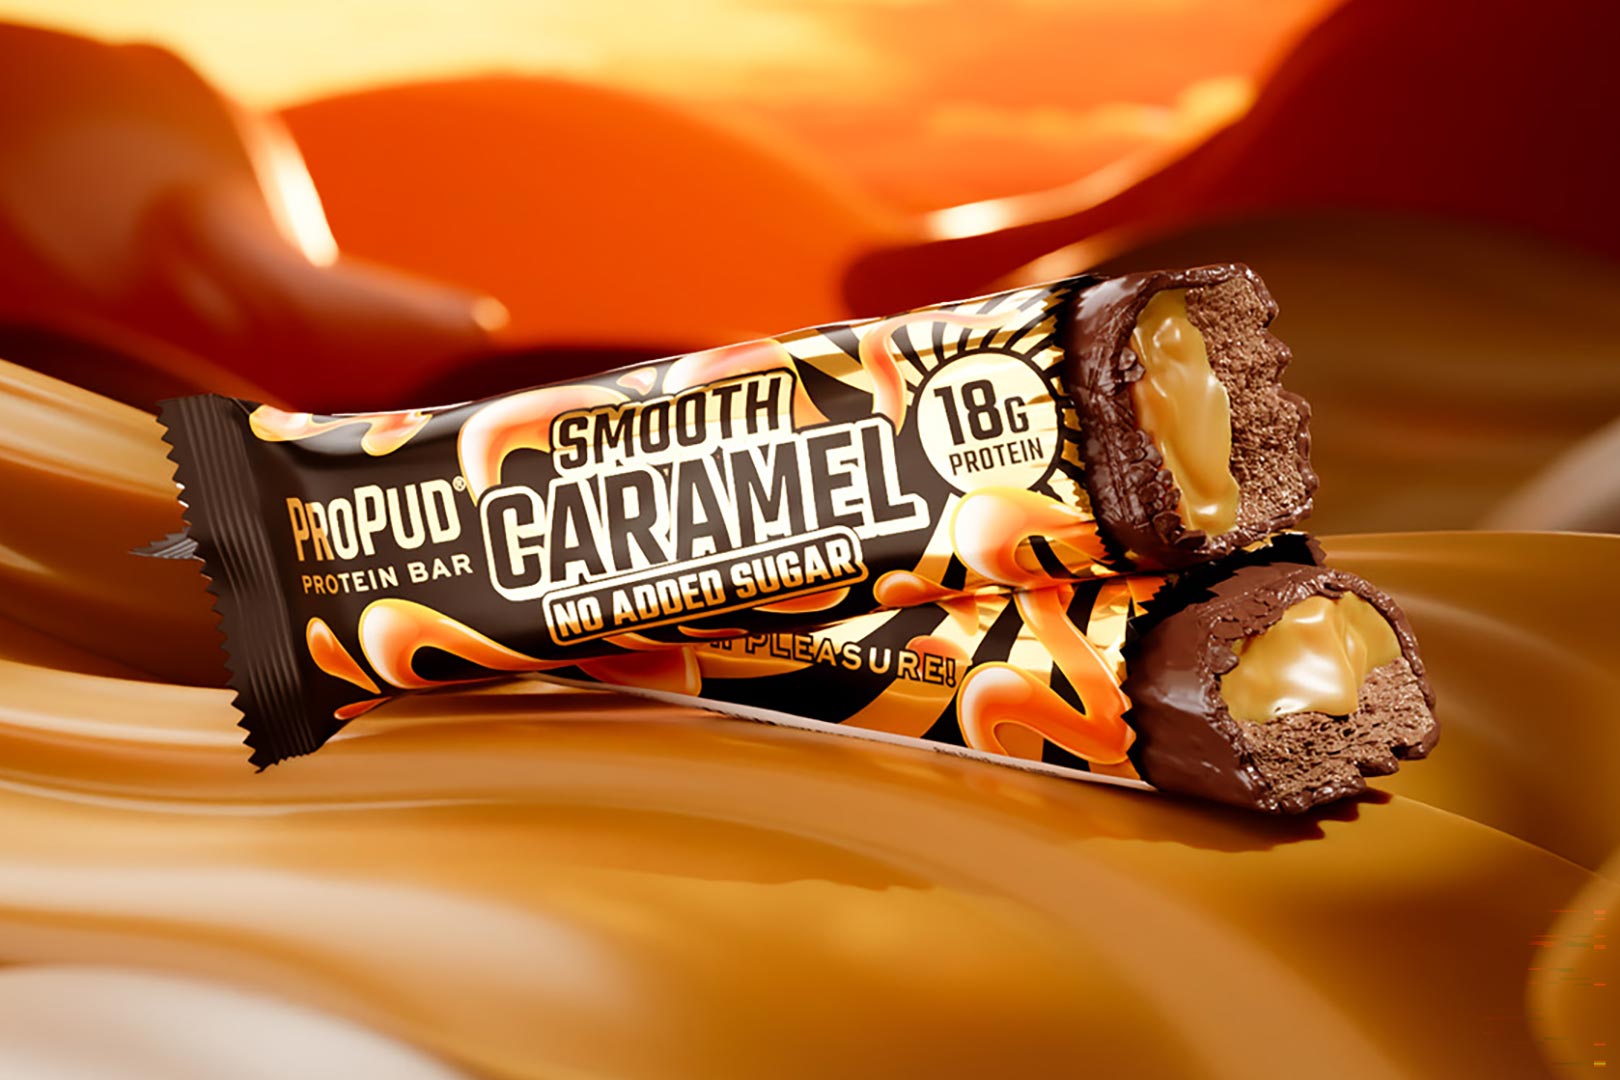 Smooth Caramel Propud Protein Bar